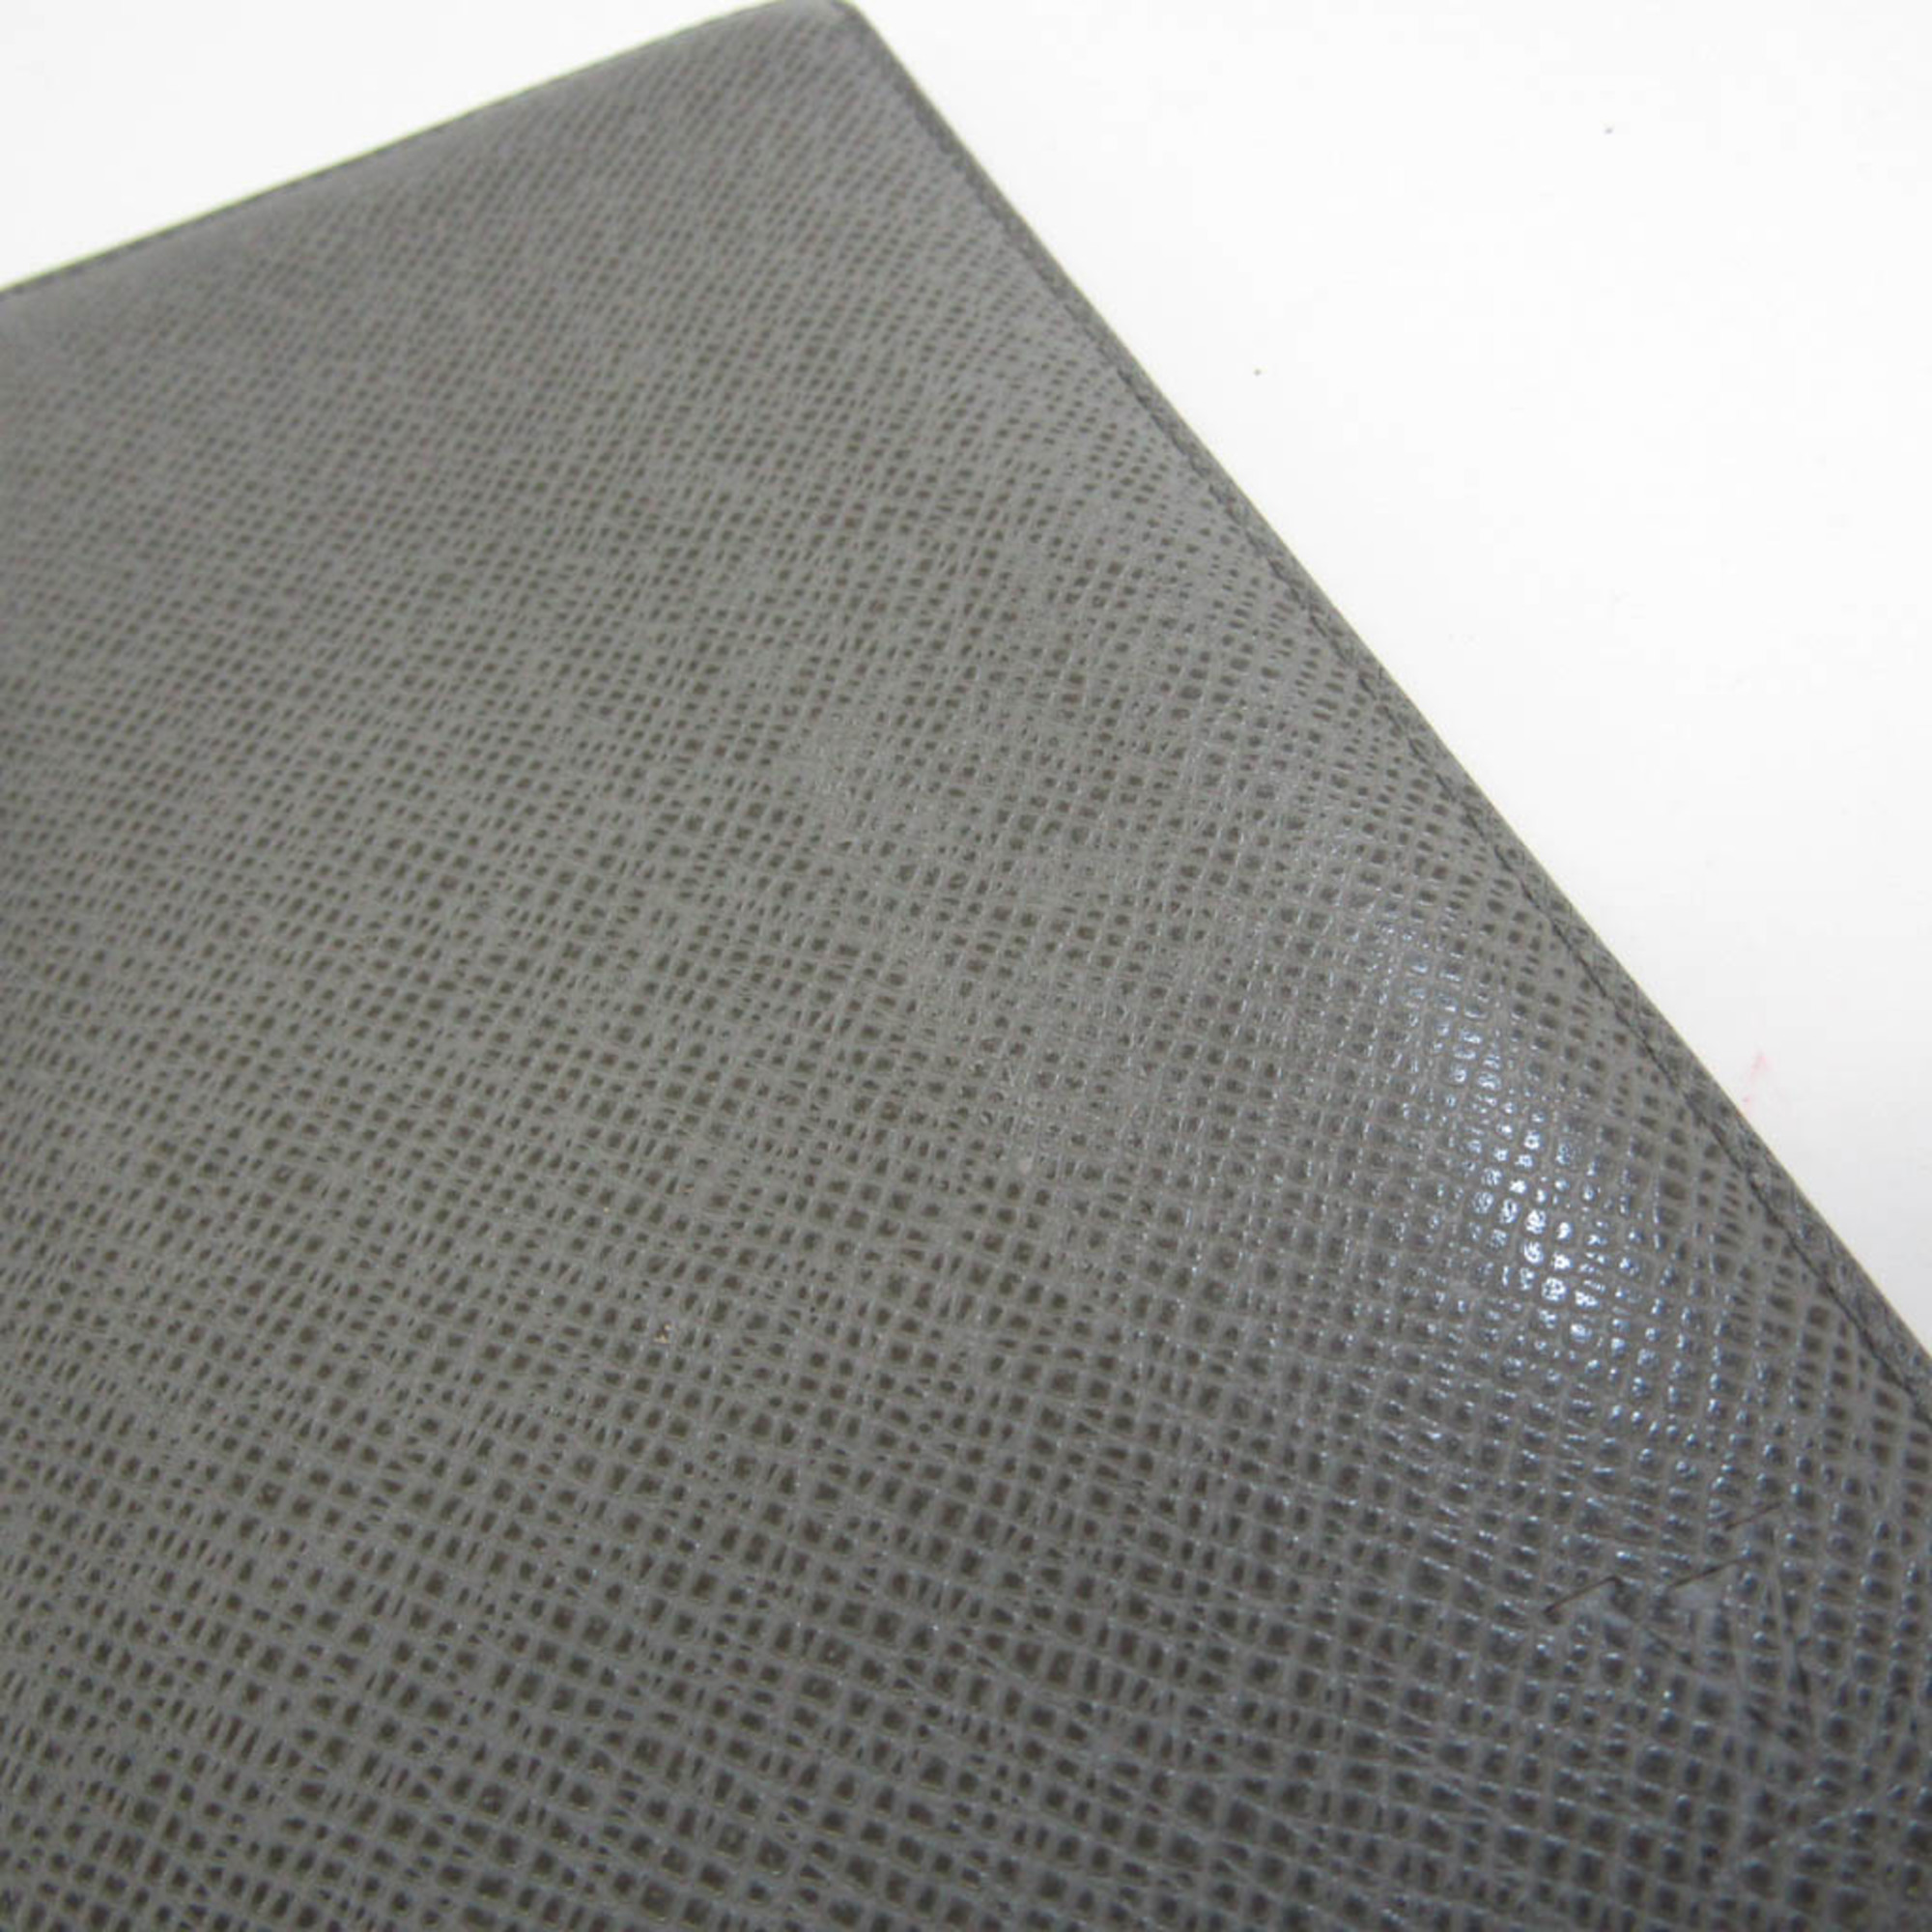 Louis Vuitton Taiga Brazza Wallet M32653 Men's Taiga Leather Long Wallet (bi-fold) Glacier